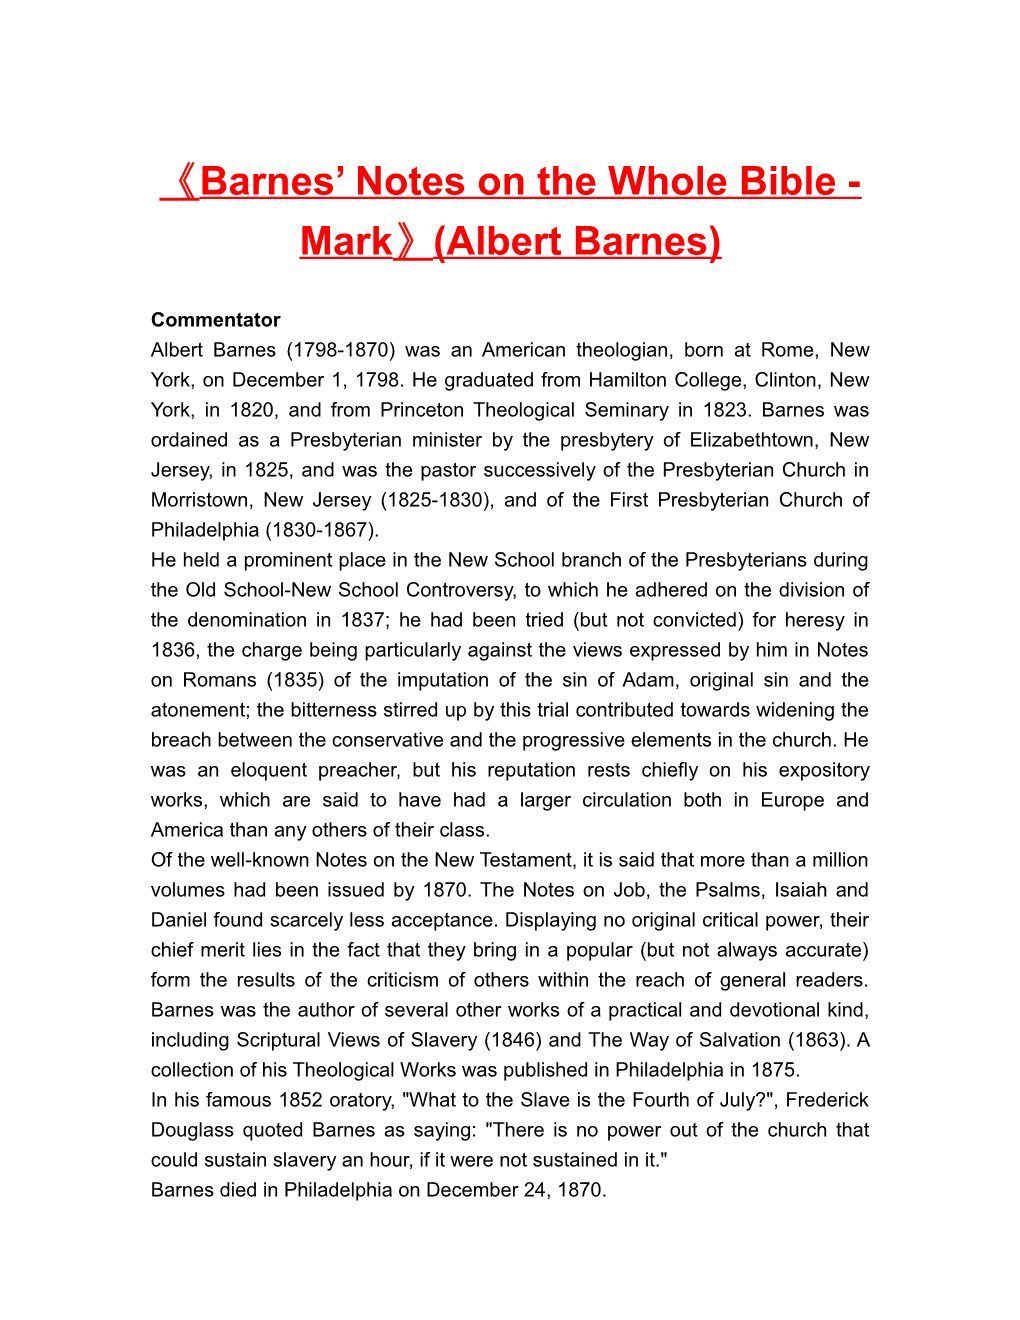 Barnes Notes on the Whole Bible - Mark (Albert Barnes)